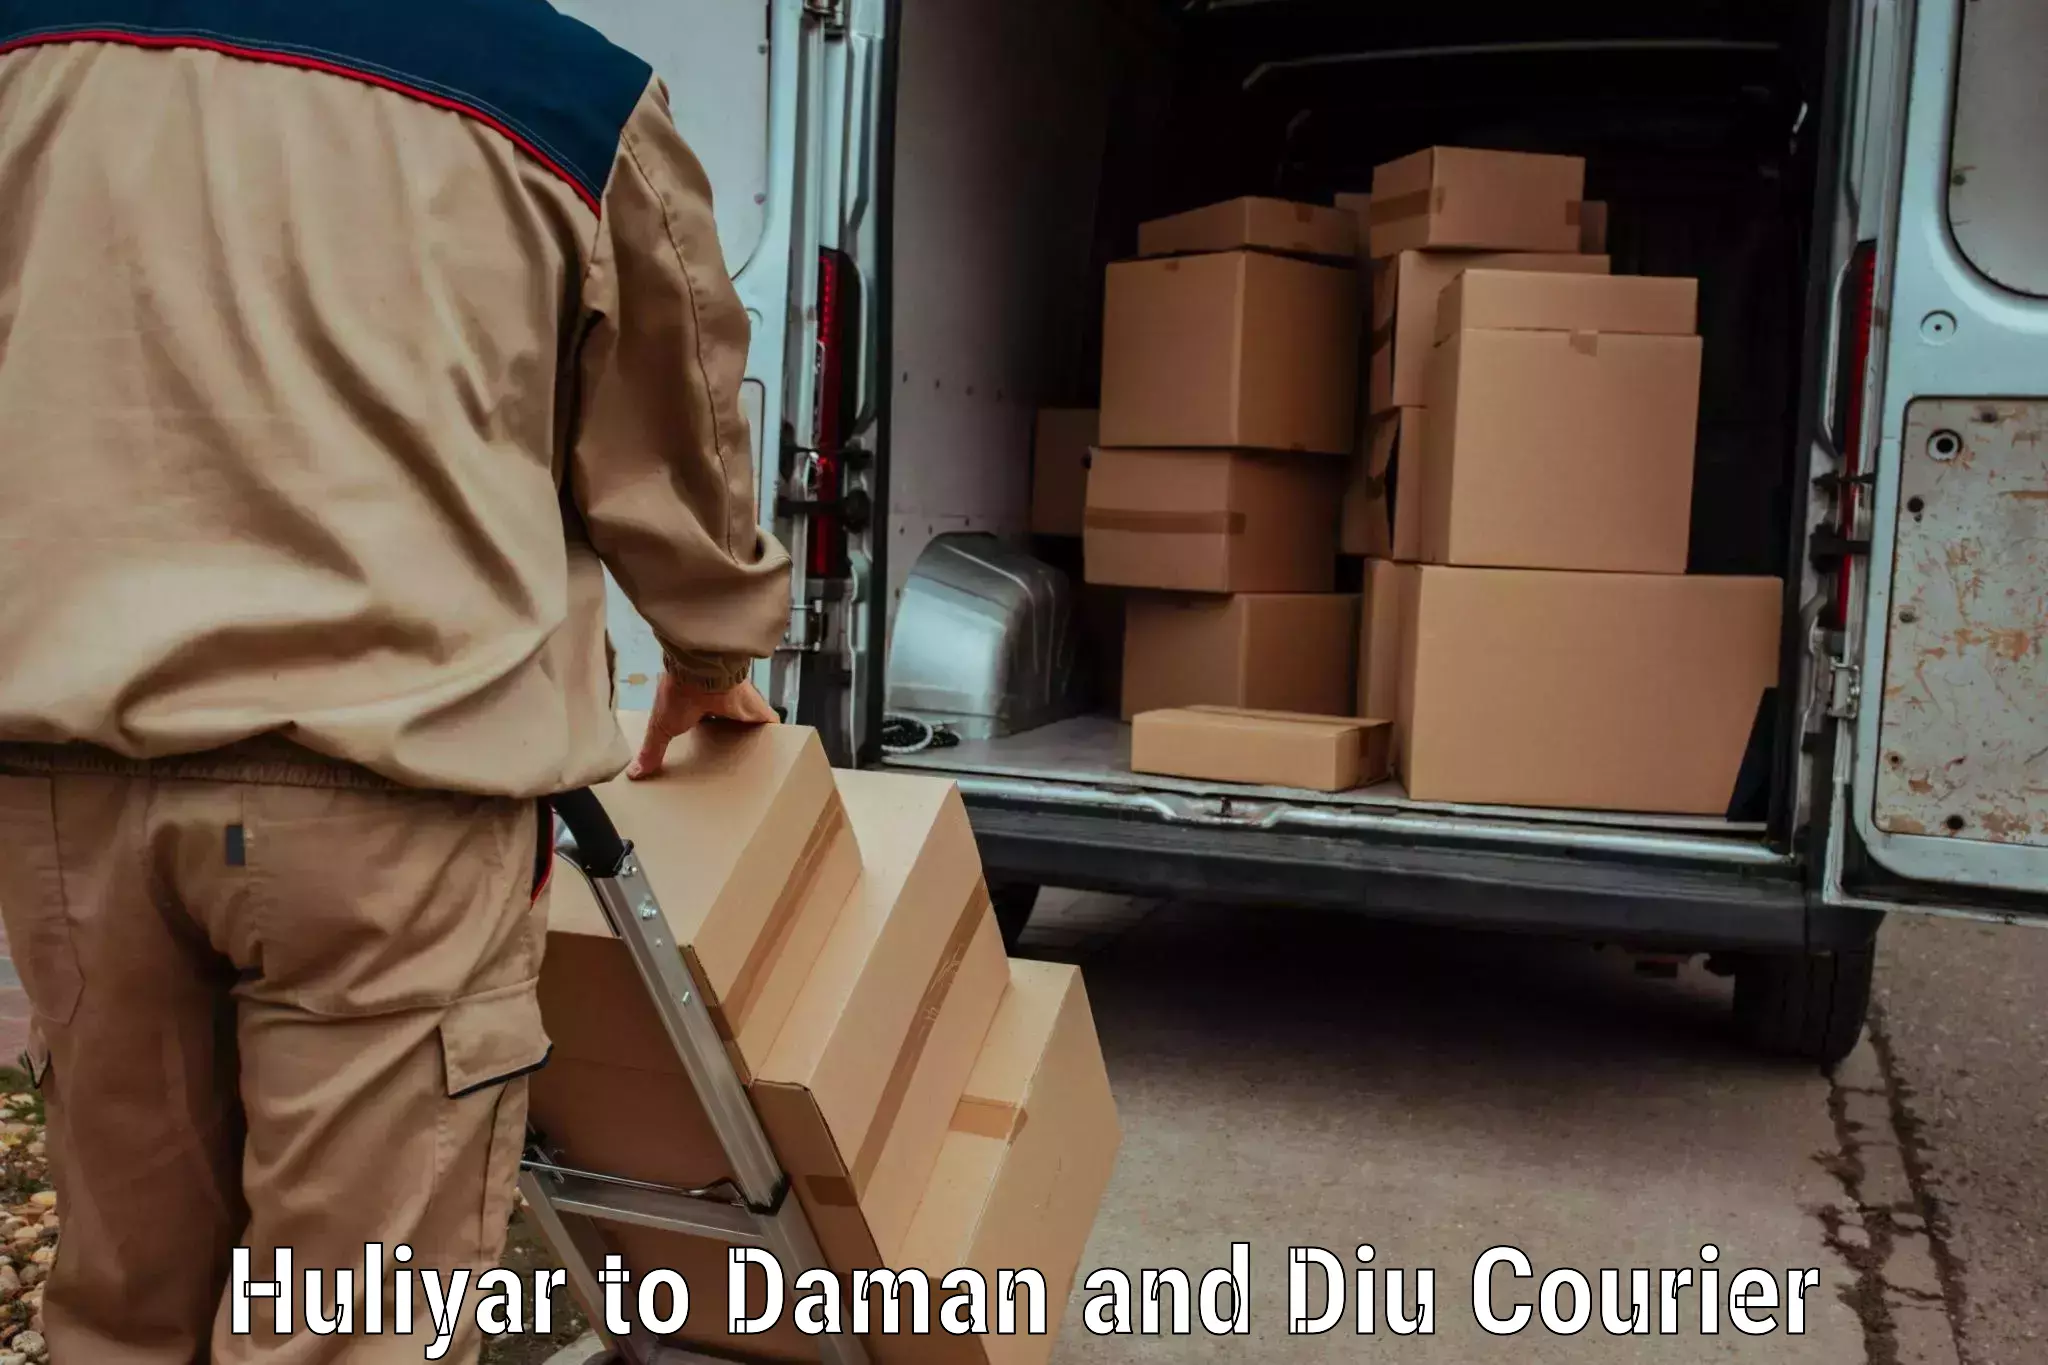 Next day courier Huliyar to Daman